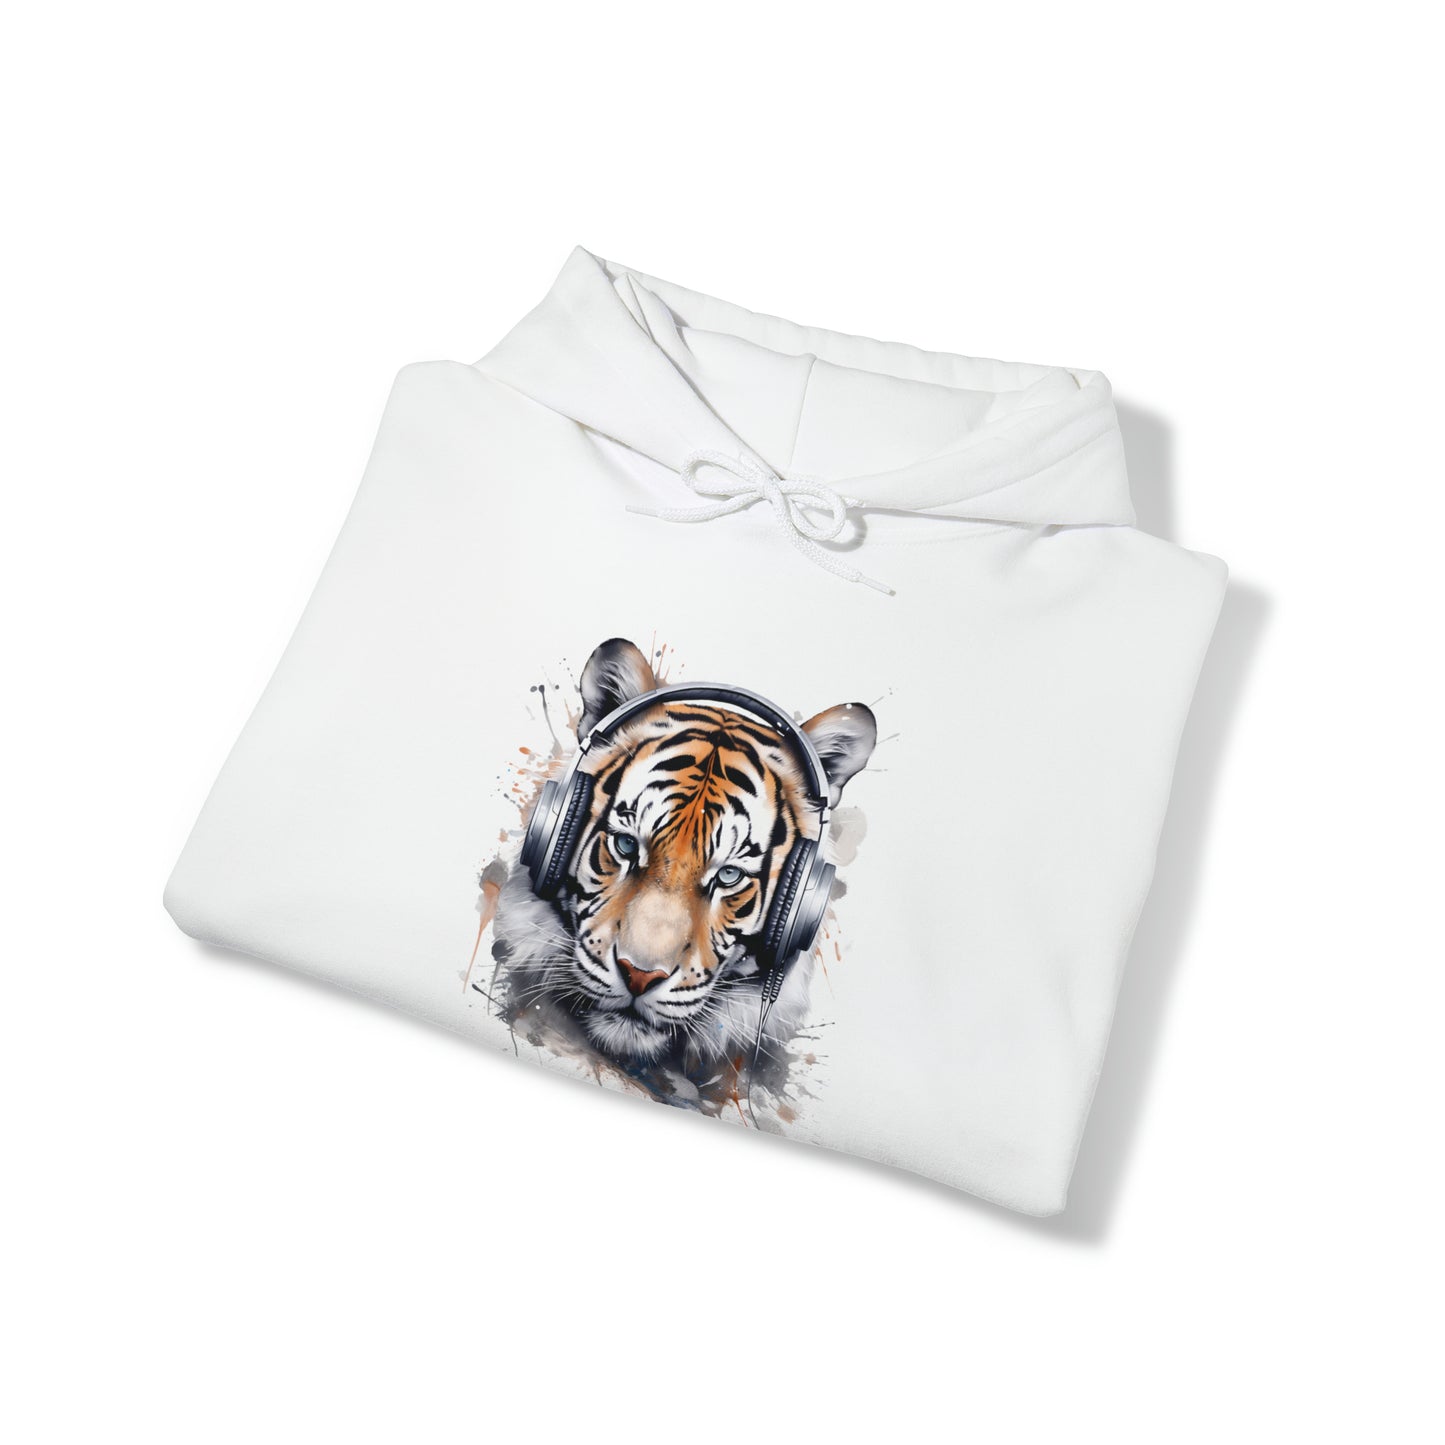 Tiger Headphones | Unisex Heavy Blend™ Hooded Sweatshirt